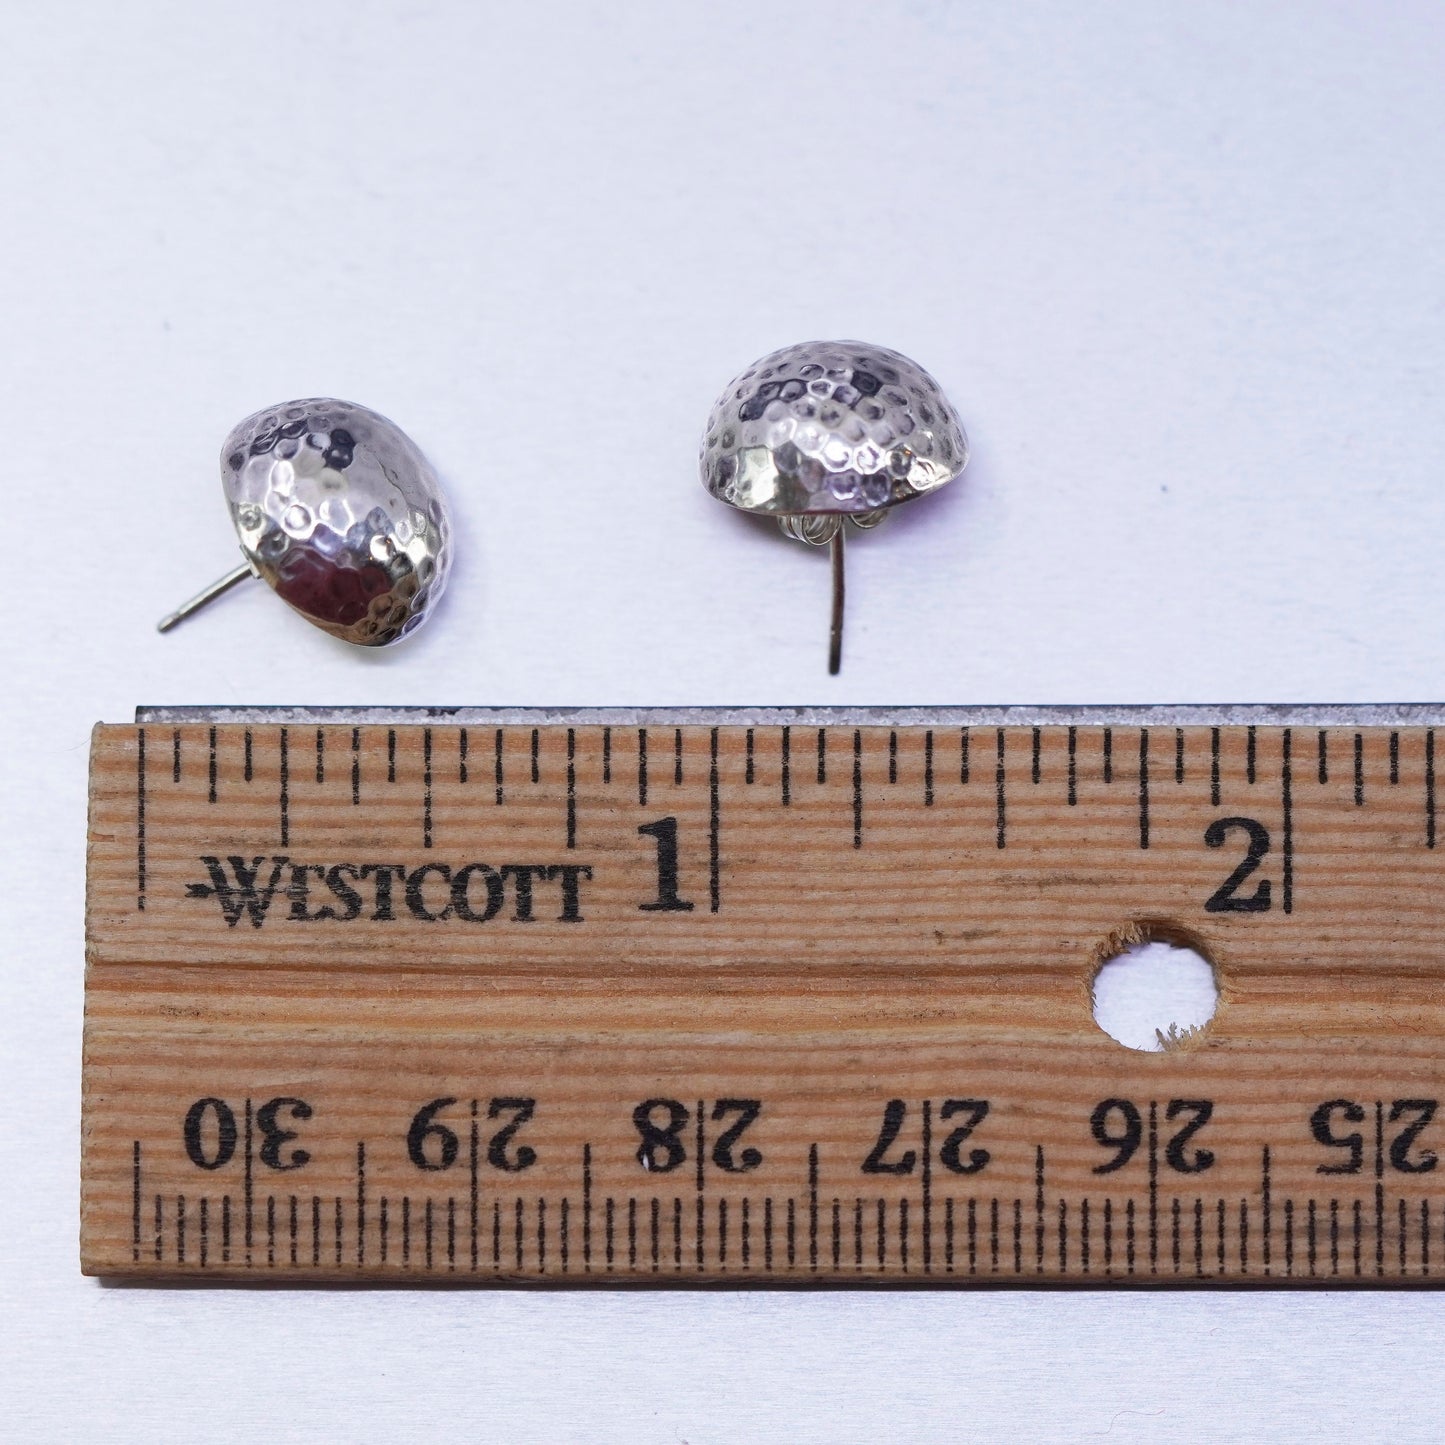 Vintage Sterling 925 silver handmade earrings, hammered textured studs